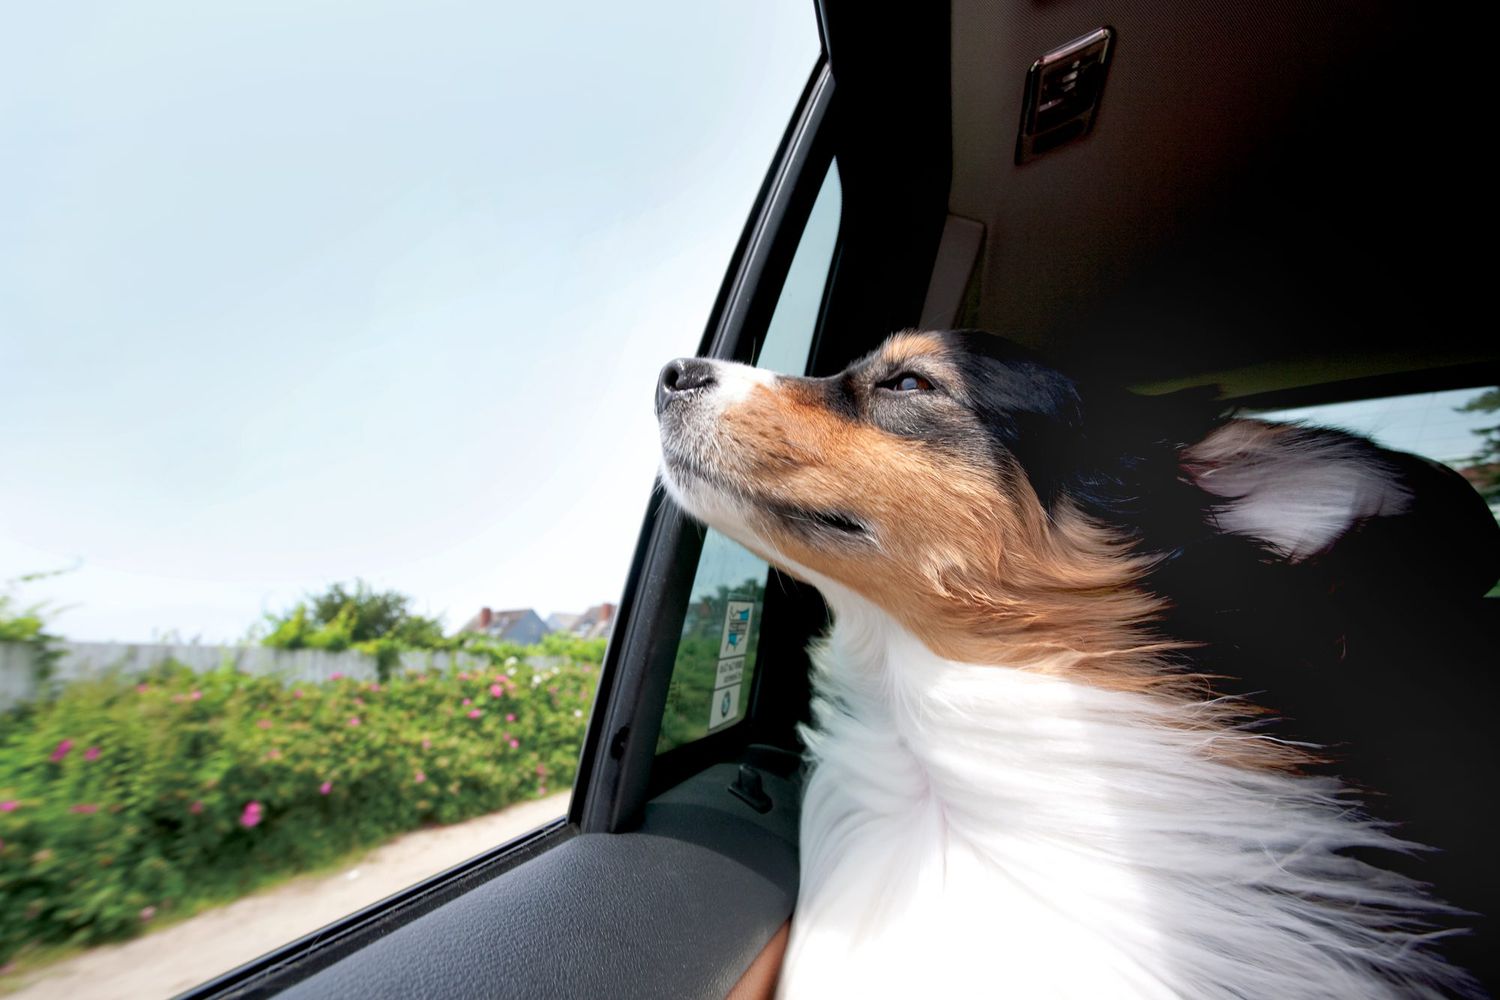 Australian Shepard dog riding in car with window open